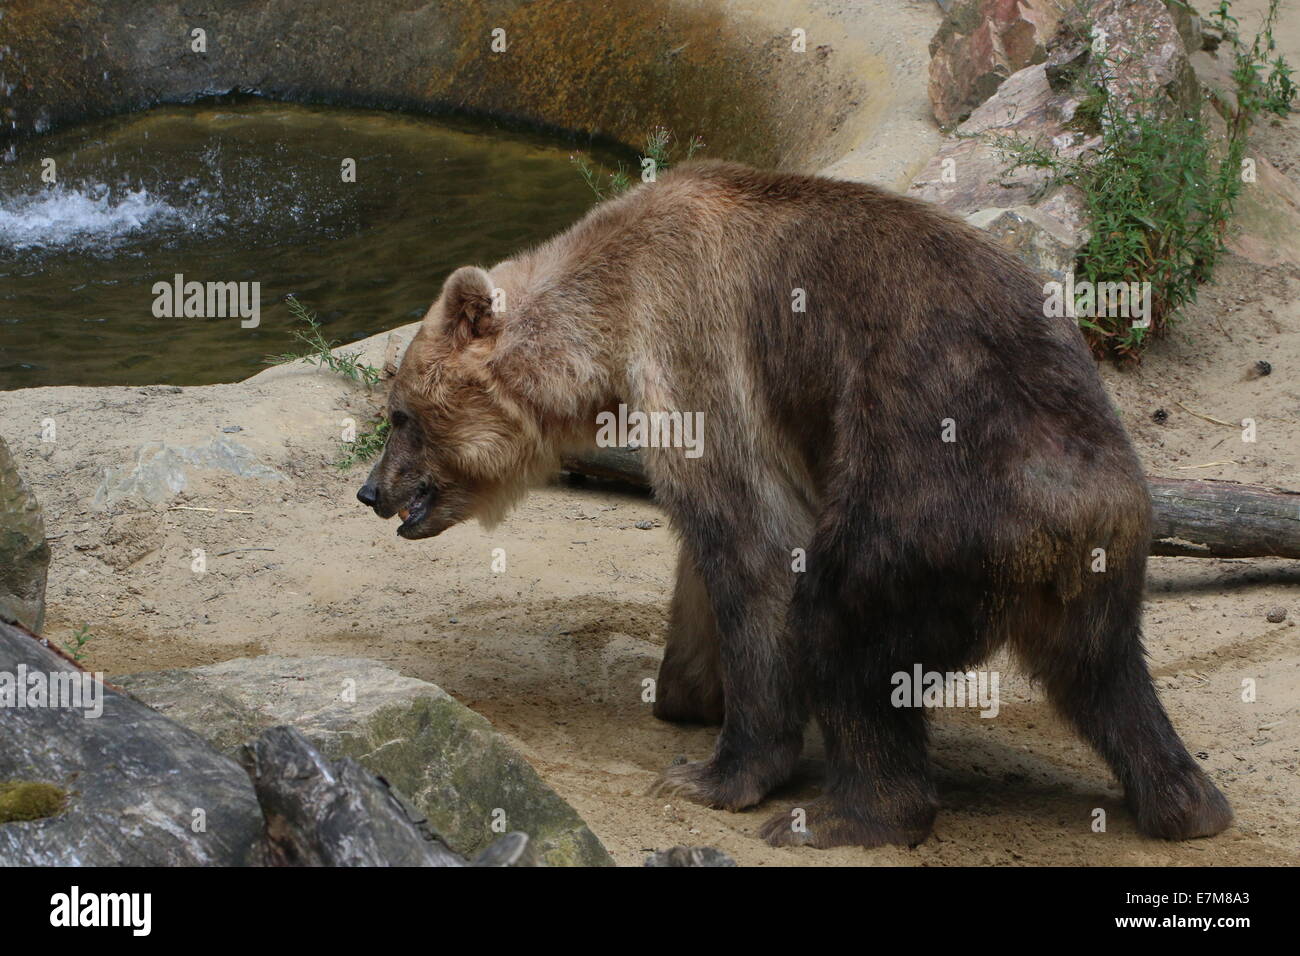 Eurasian l'orso bruno (Ursus arctos arctos) passeggiate in un ambiente naturale Foto Stock